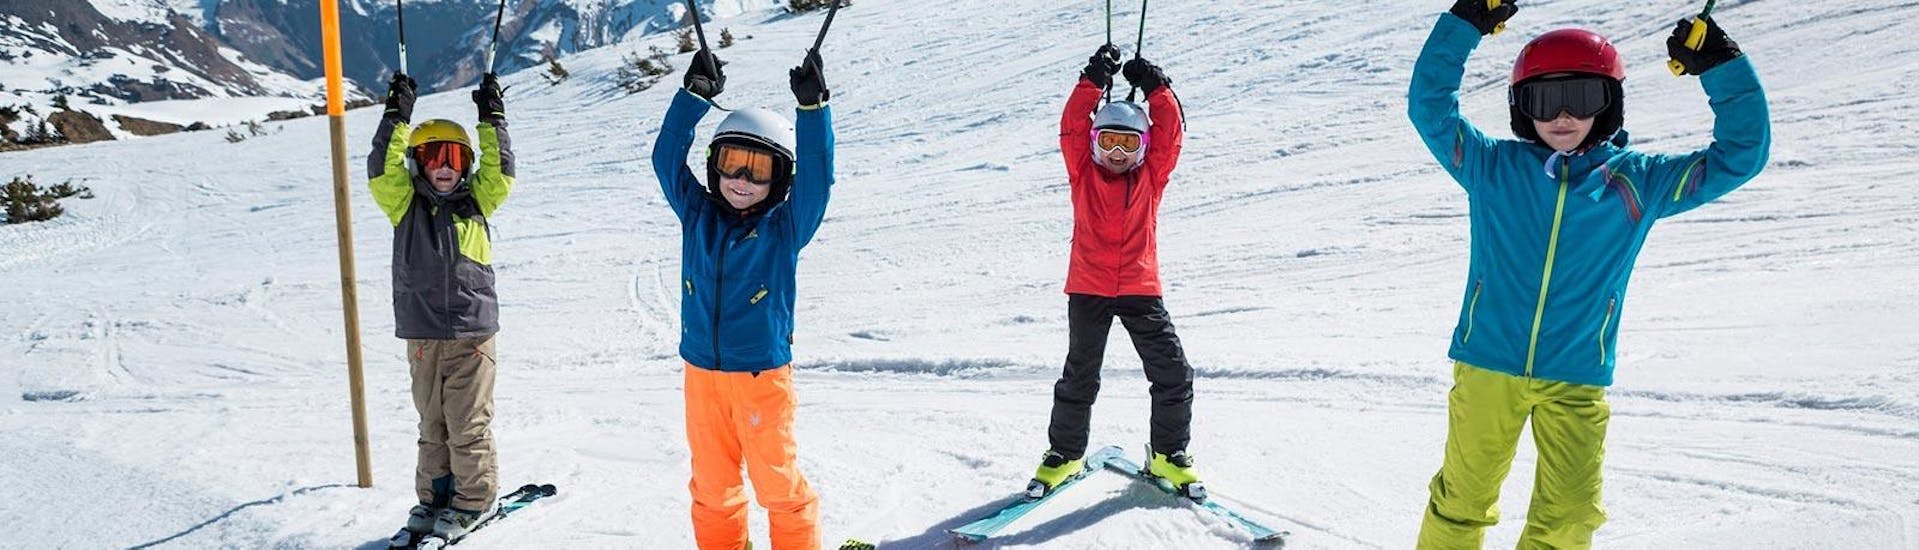 Kids Ski Lessons (4-15 y.) for Advanced Skiers with Alpin Ski School Patscherkofel - Hero image